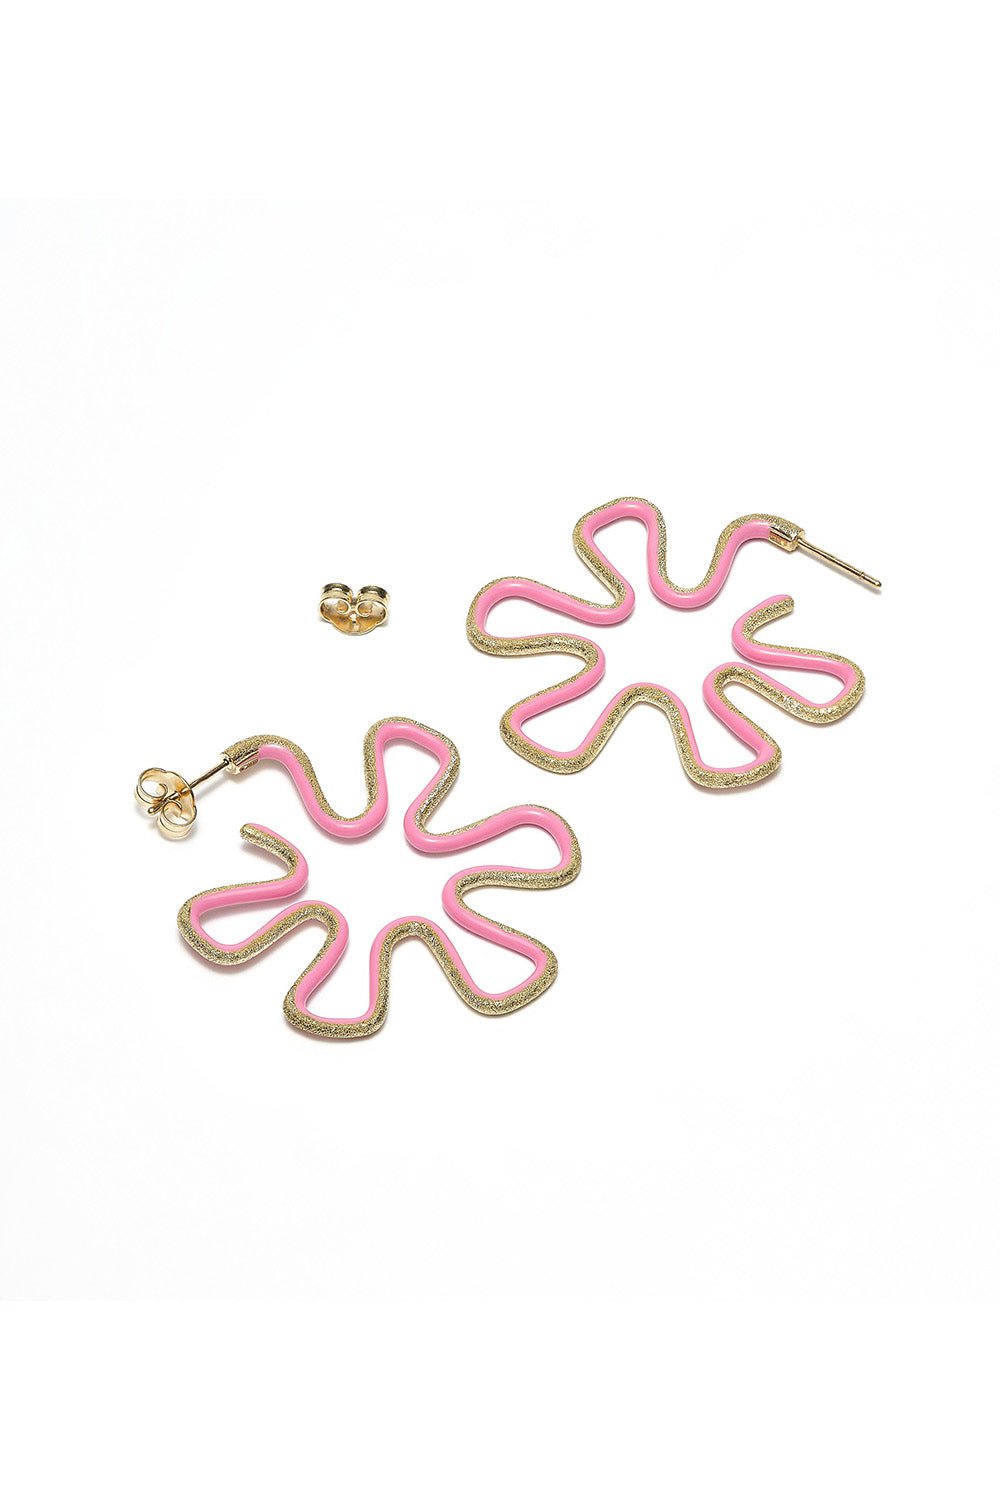 BEA BONGIASCA-Maxi Margherita Pink Earrings-YELLOW GOLD